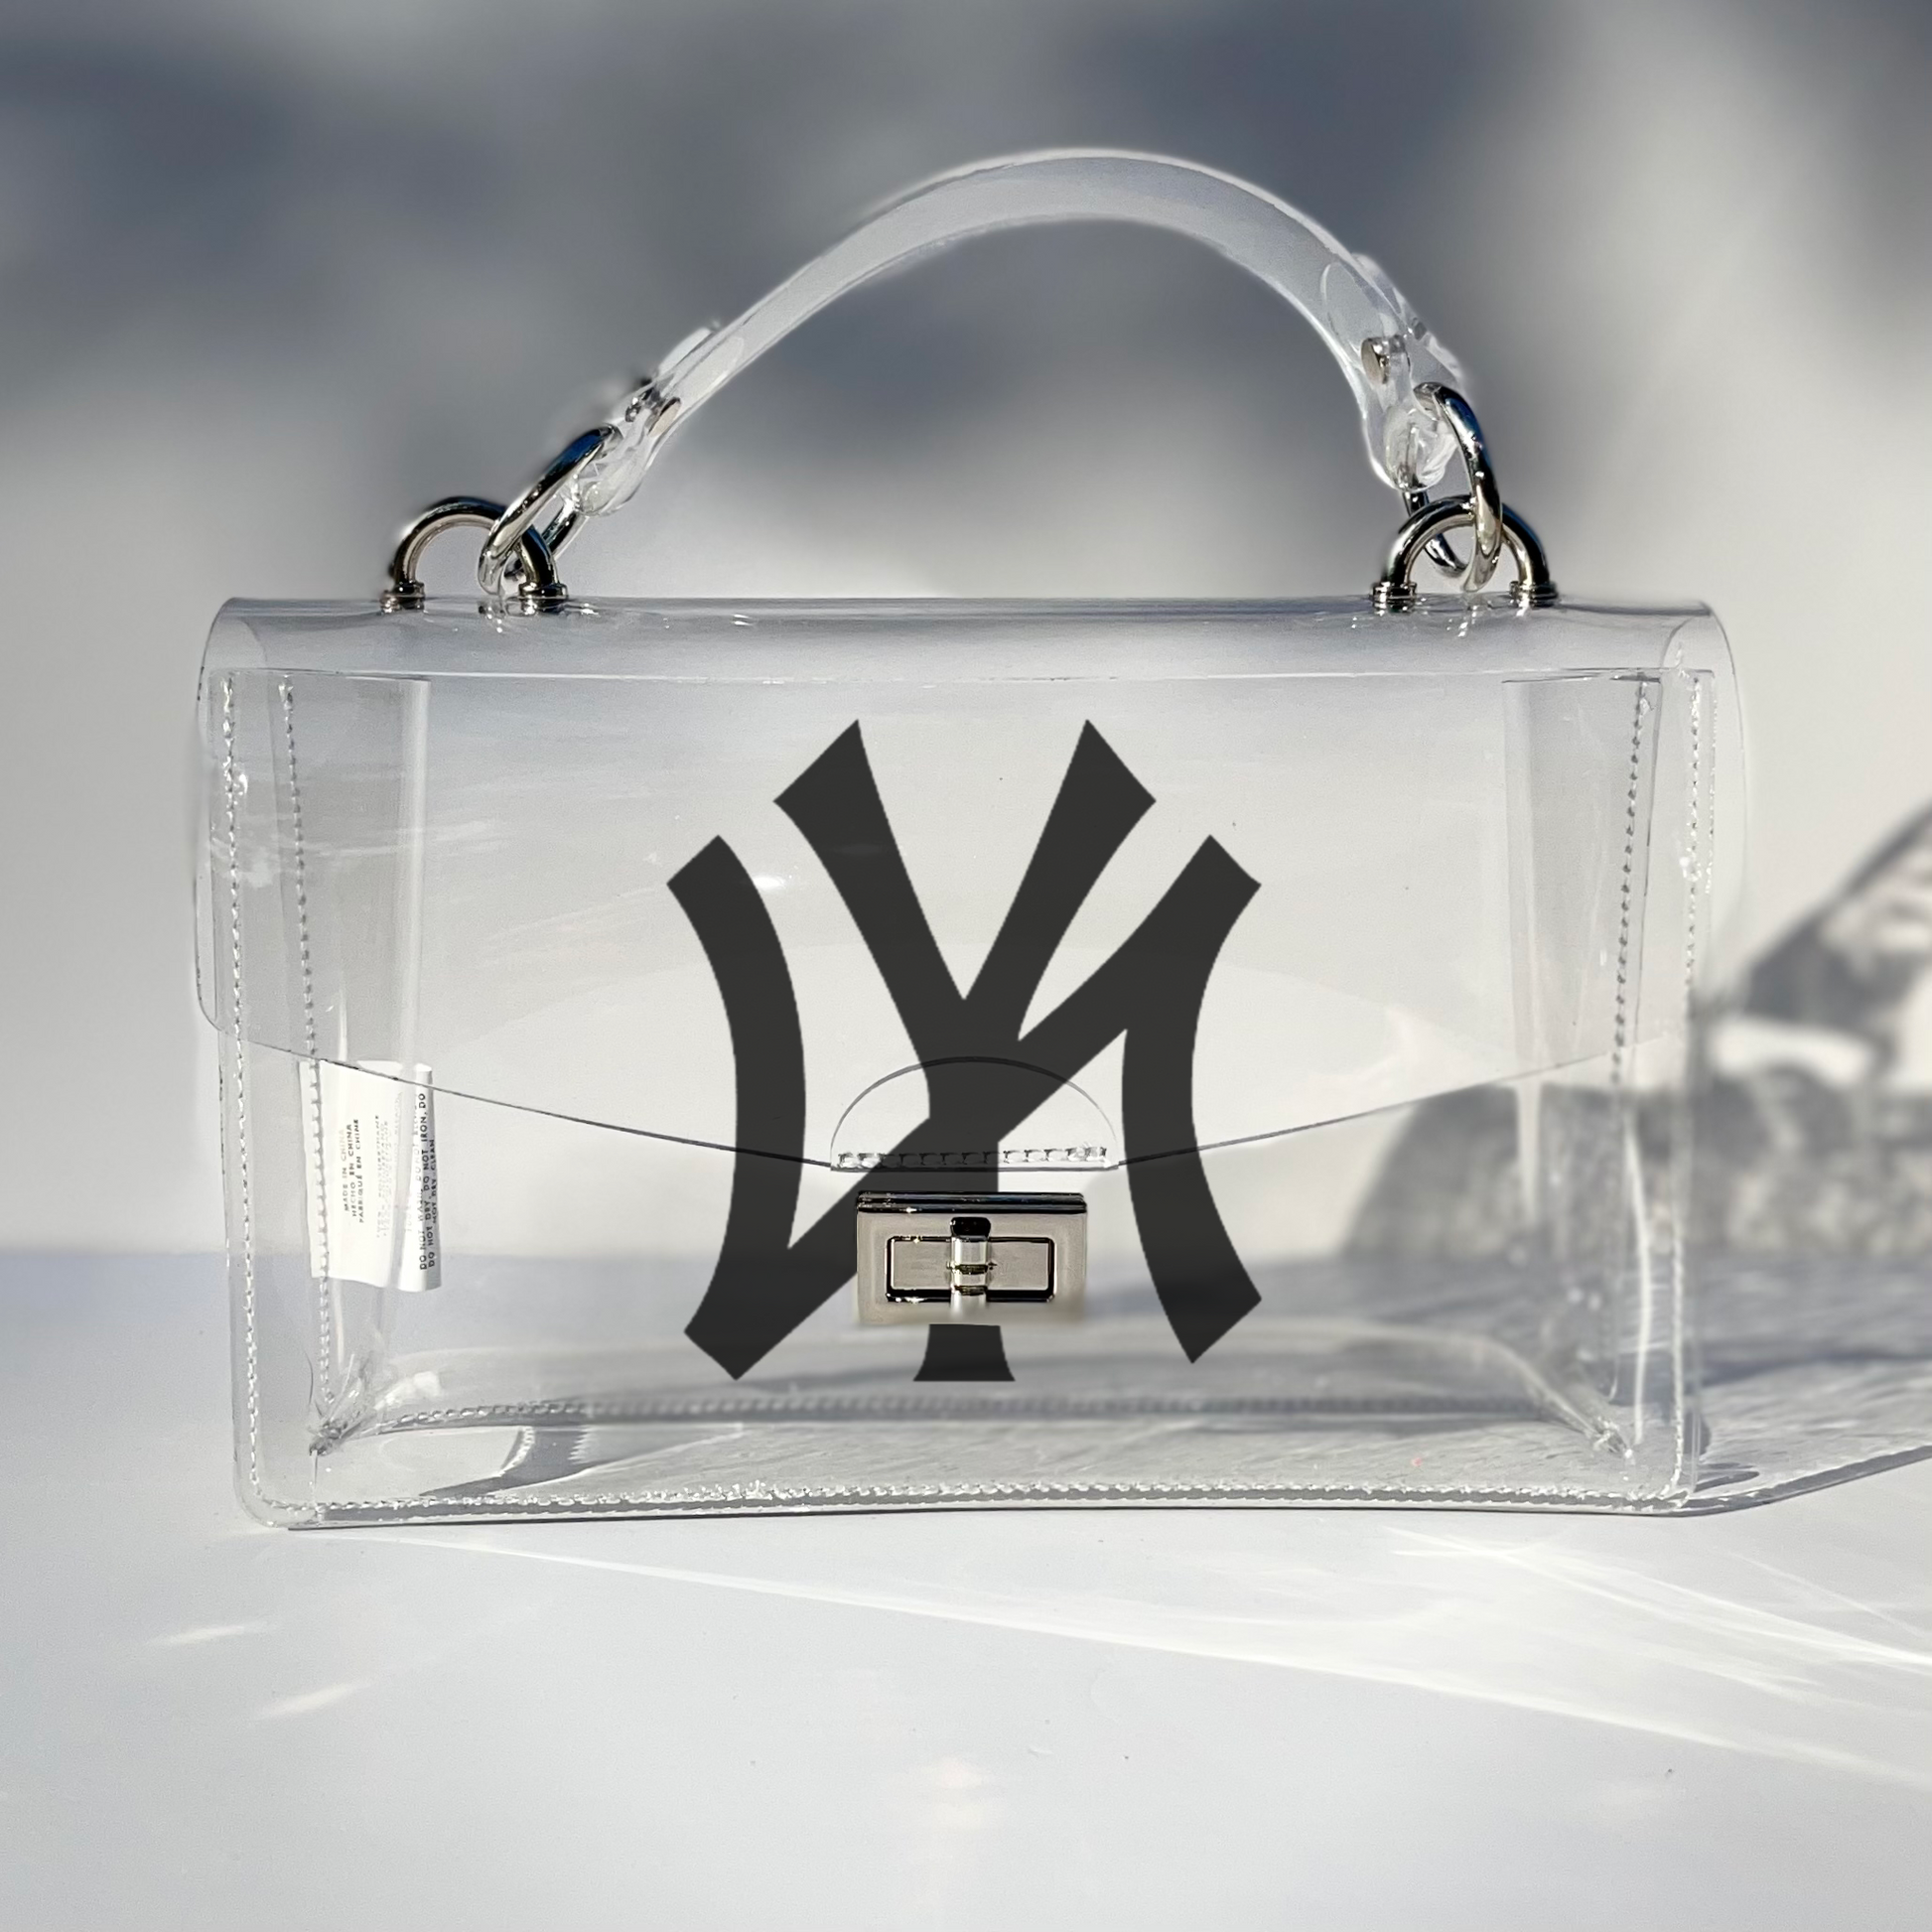 New York Yankees, stadium bag, clear purse, game day gear